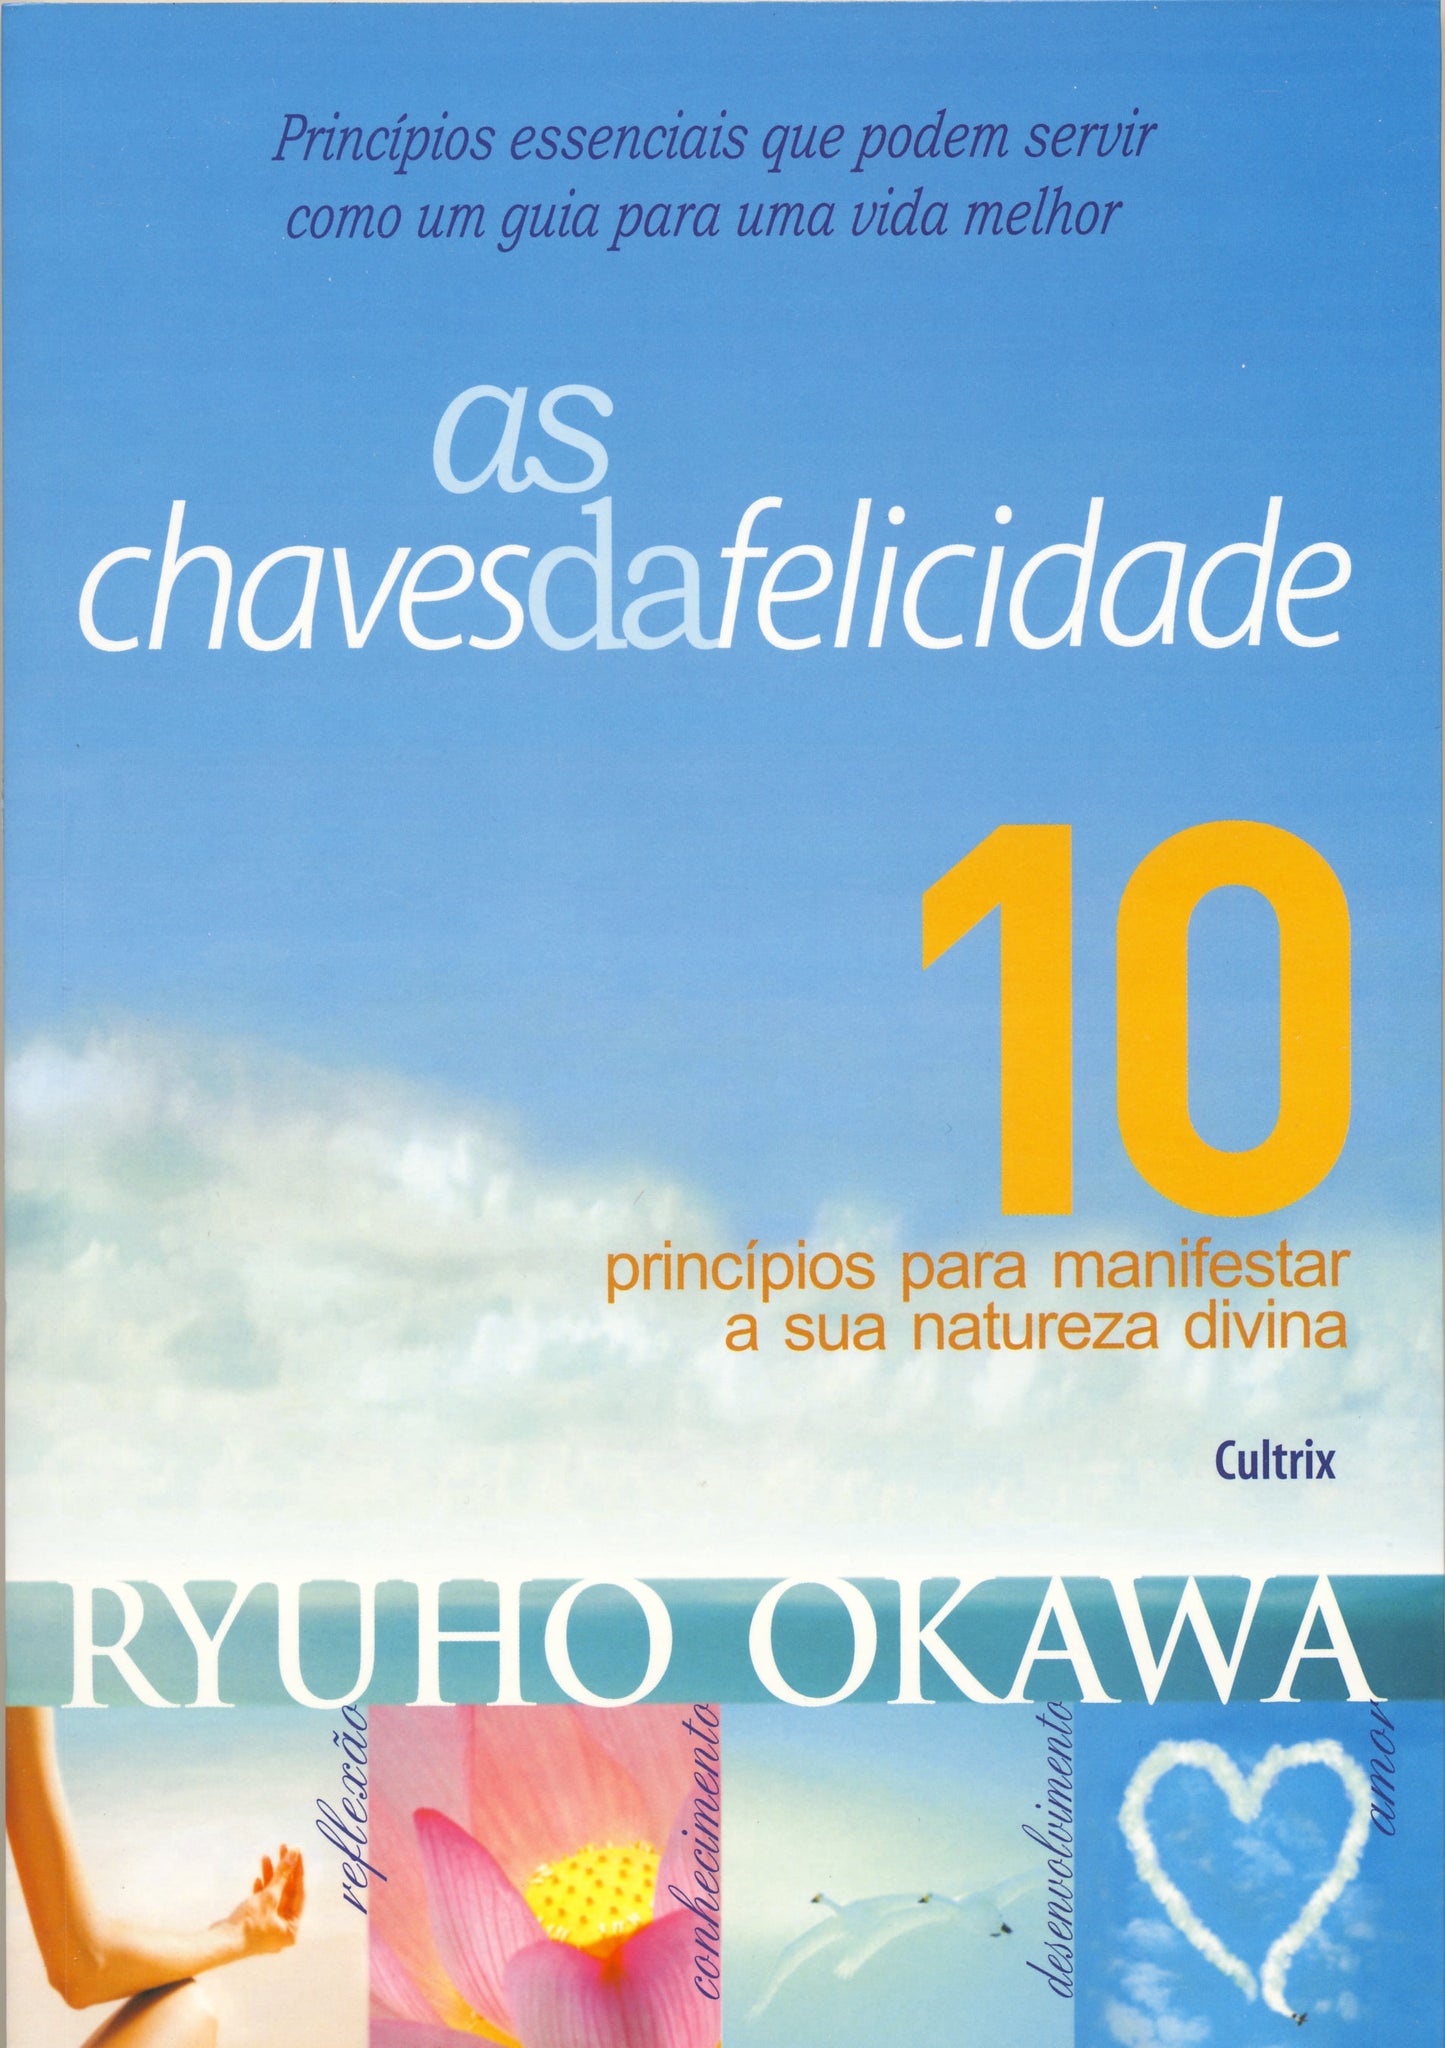 Book, The Ten Principles from El Cantare : Ryuho Okawa's First Lectures on His Basic Teachings, Ryuho Okawa, Portuguese - IRH Press International